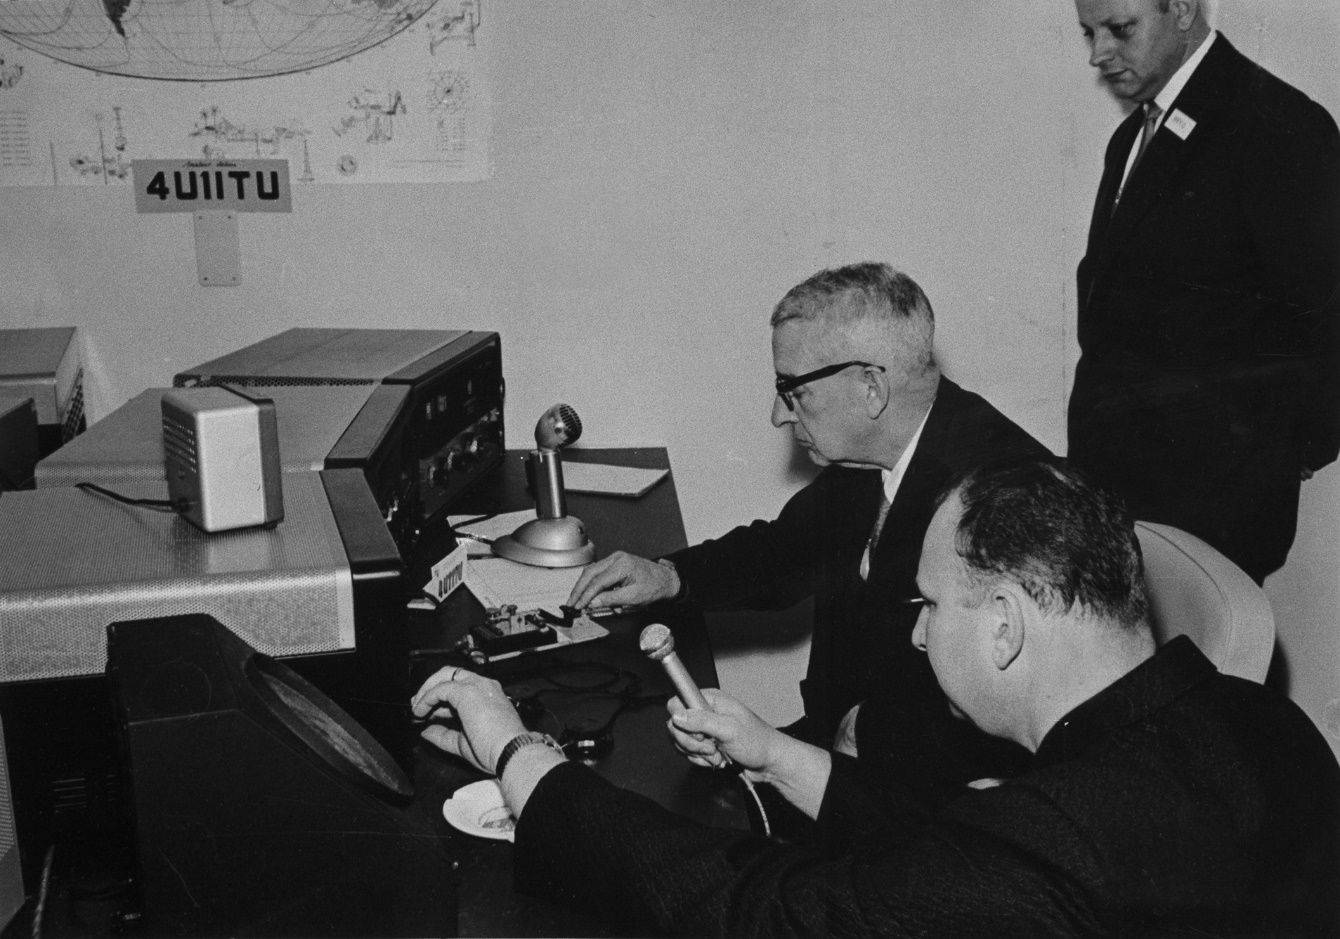 ITU’s ham radio station celebrates 60 years on air featured image